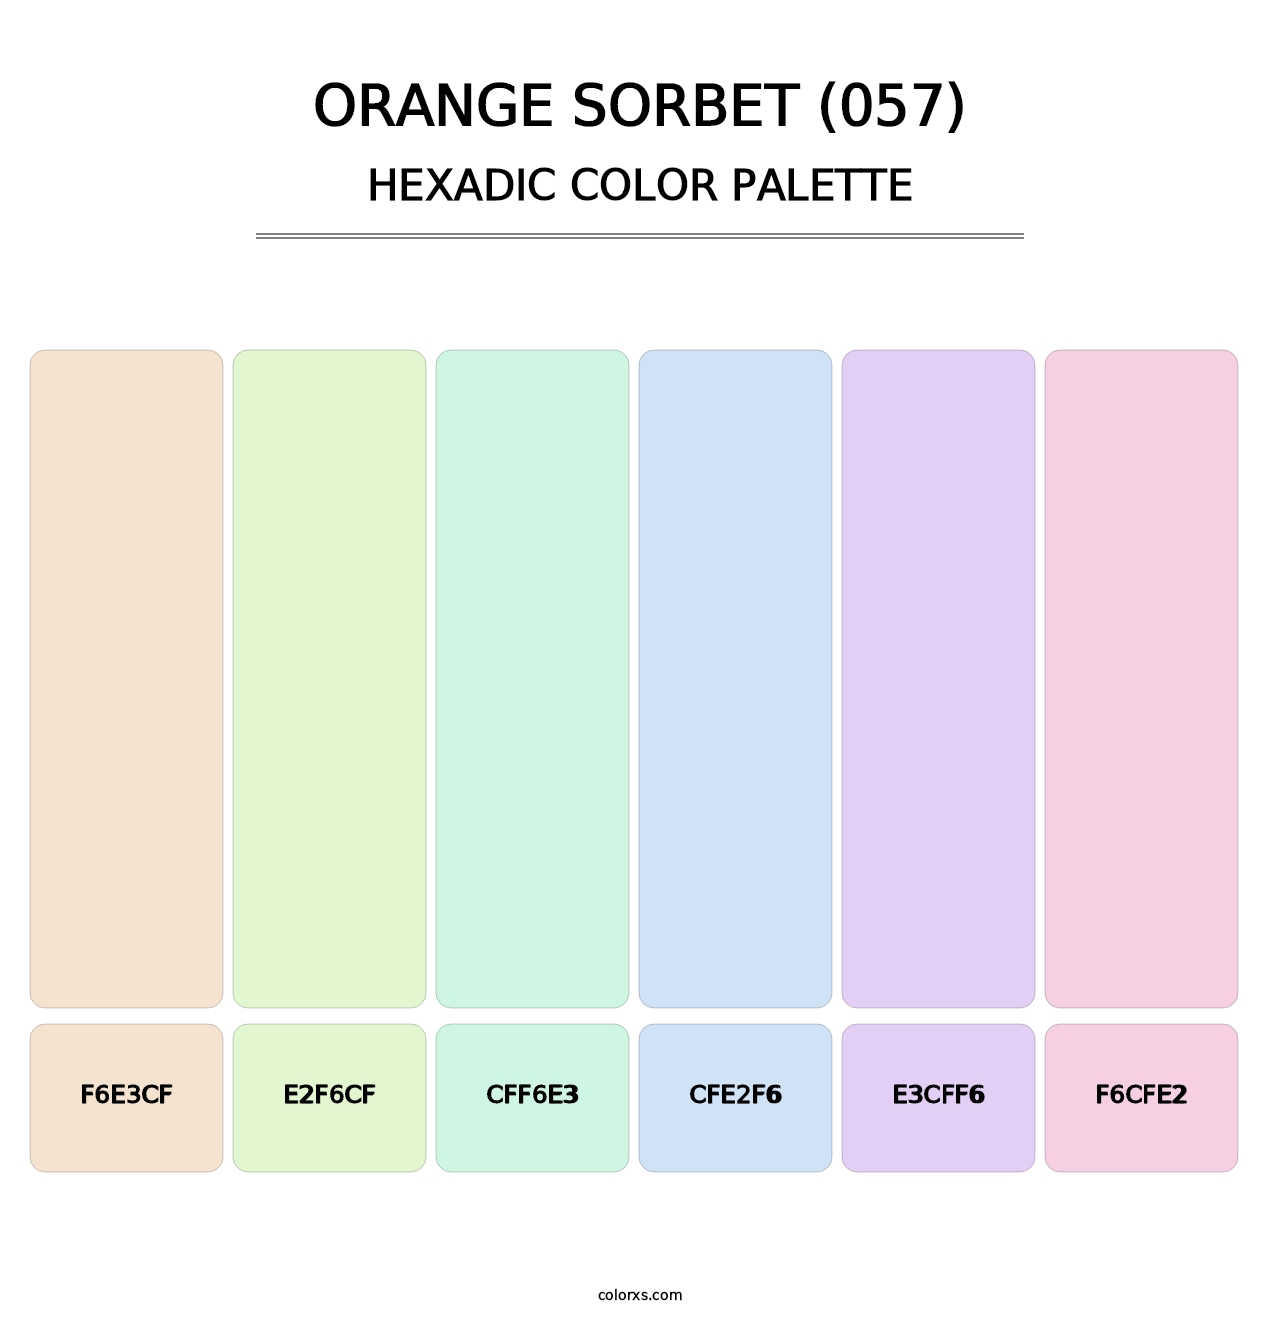 Orange Sorbet (057) - Hexadic Color Palette